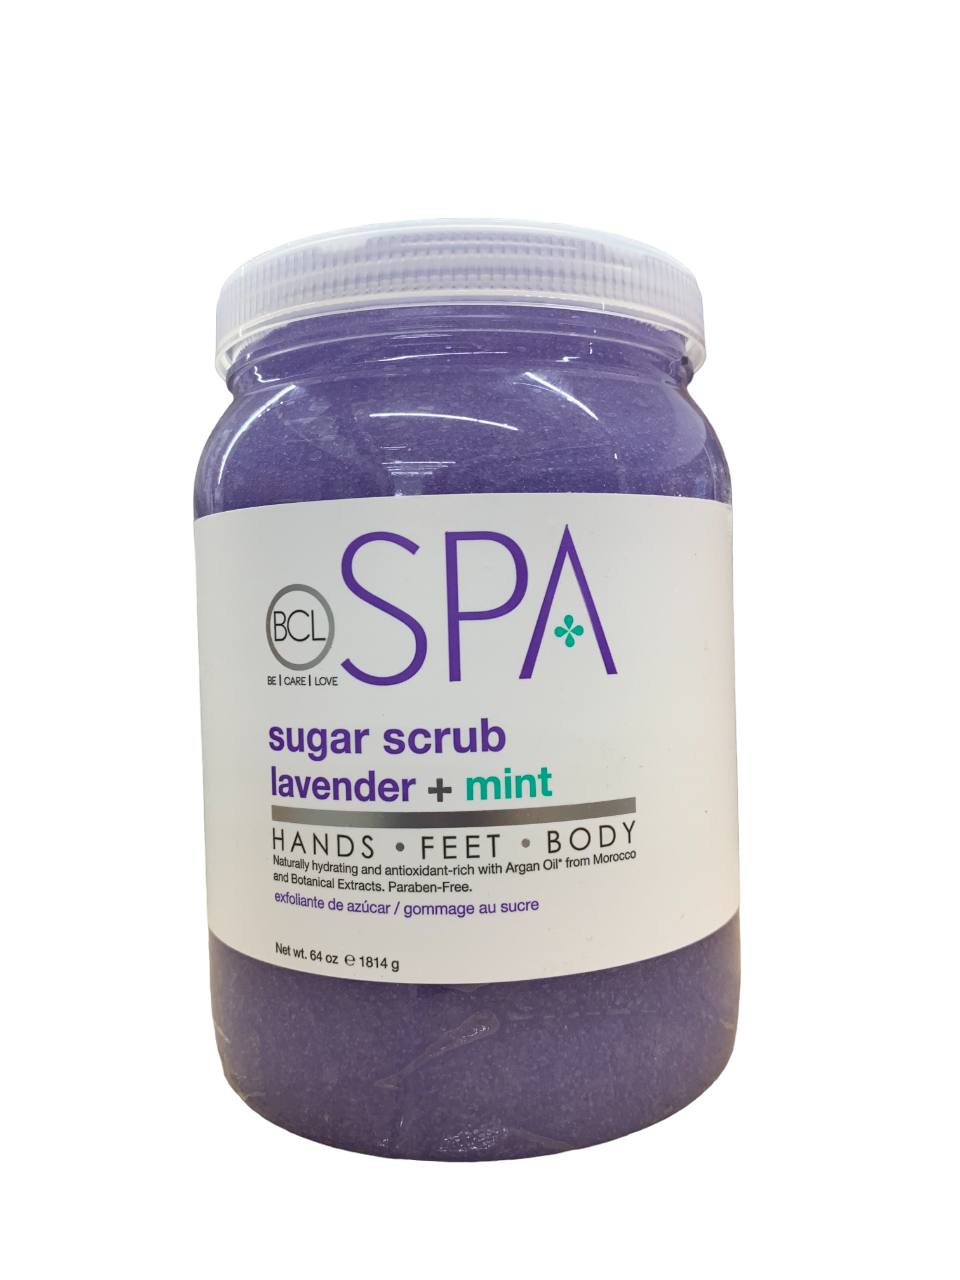 BCL Spa Sugar Scrub Lavender Mint